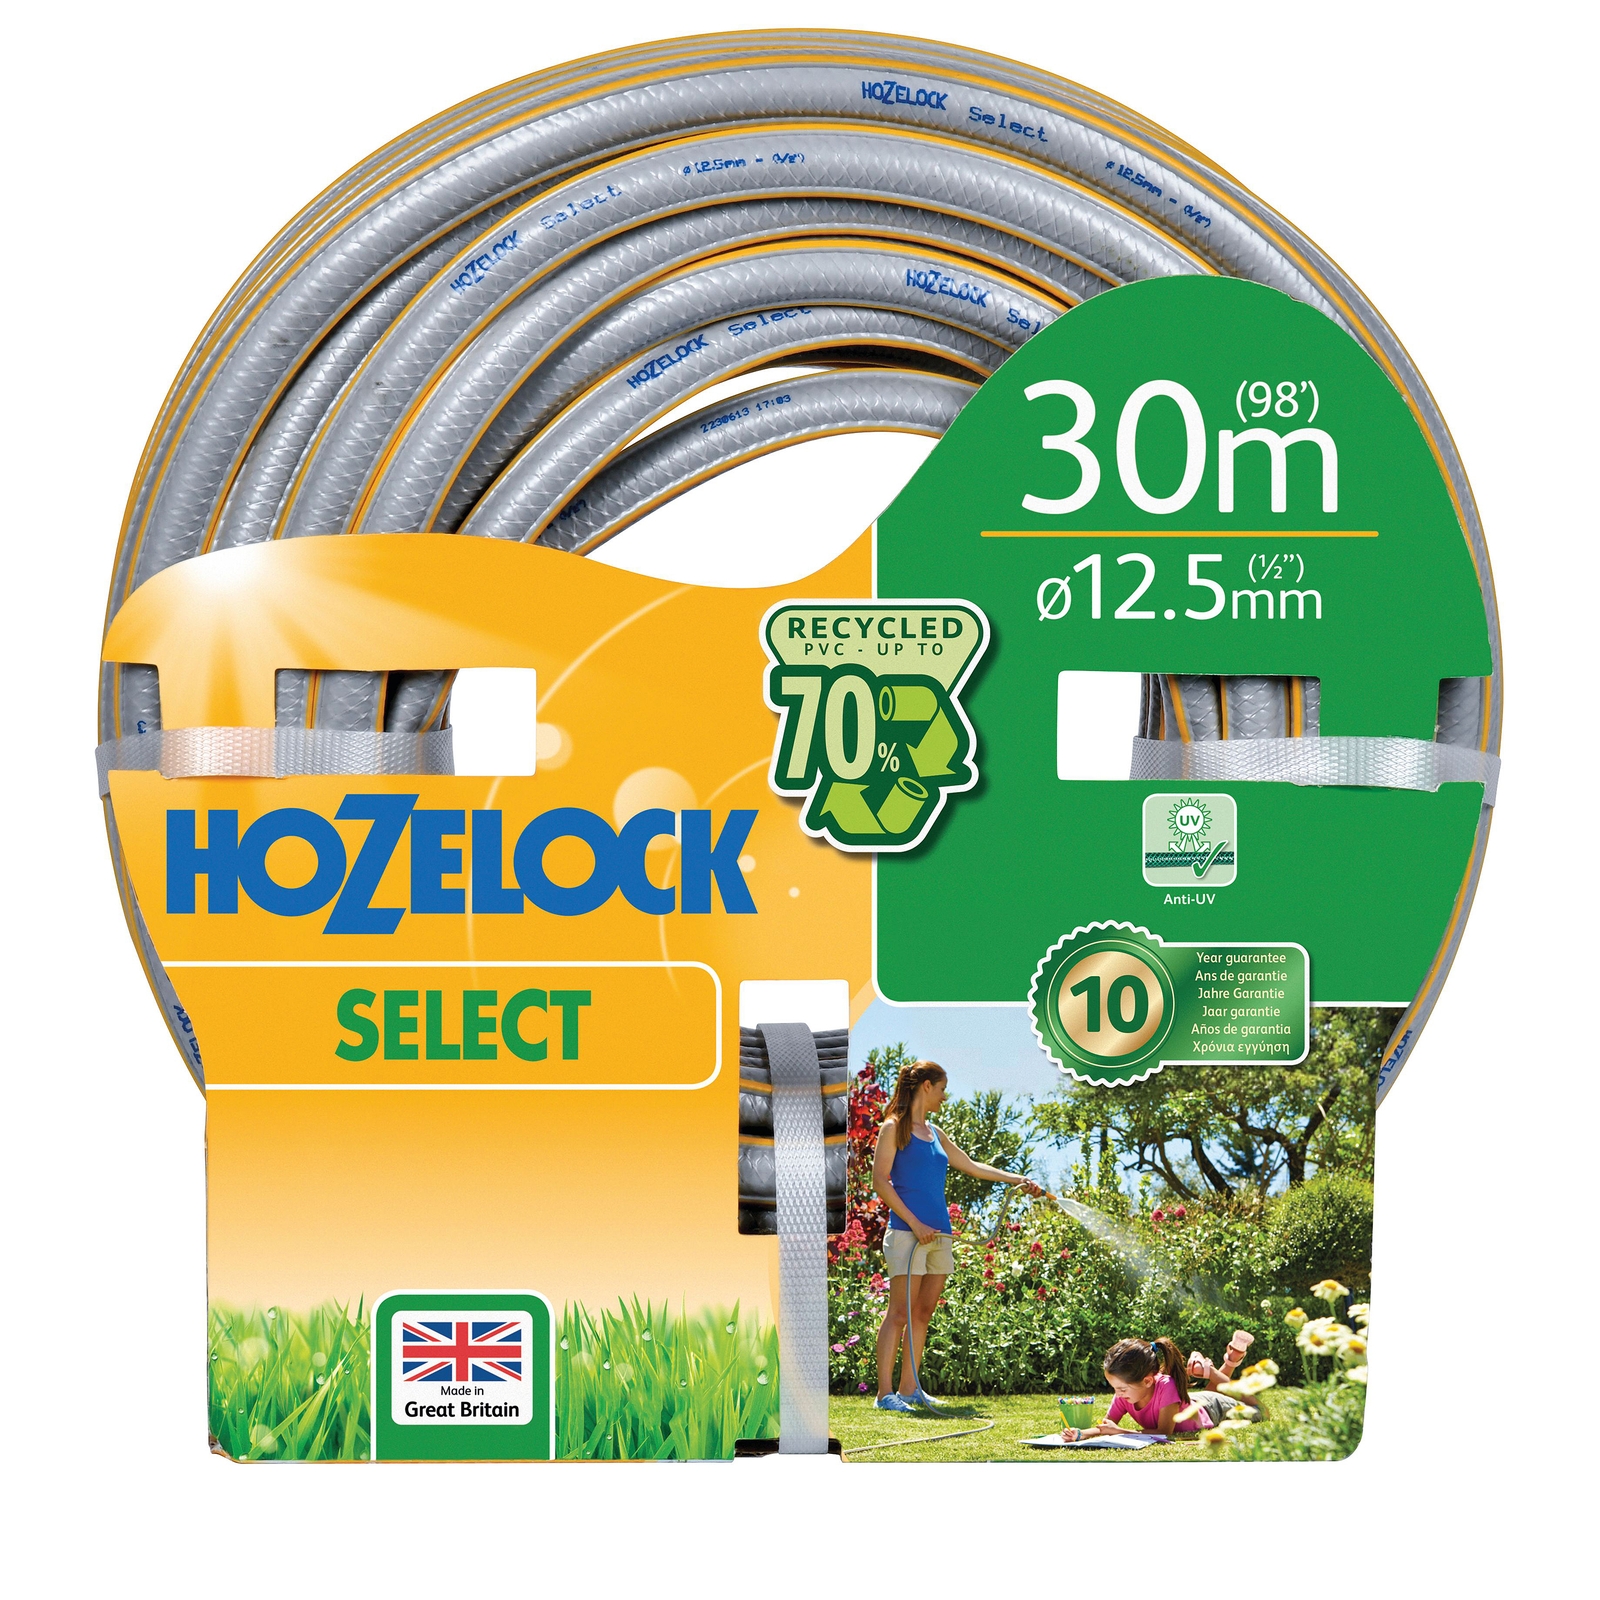 Hozelock Select 30m Hose (12.5mm diameter)